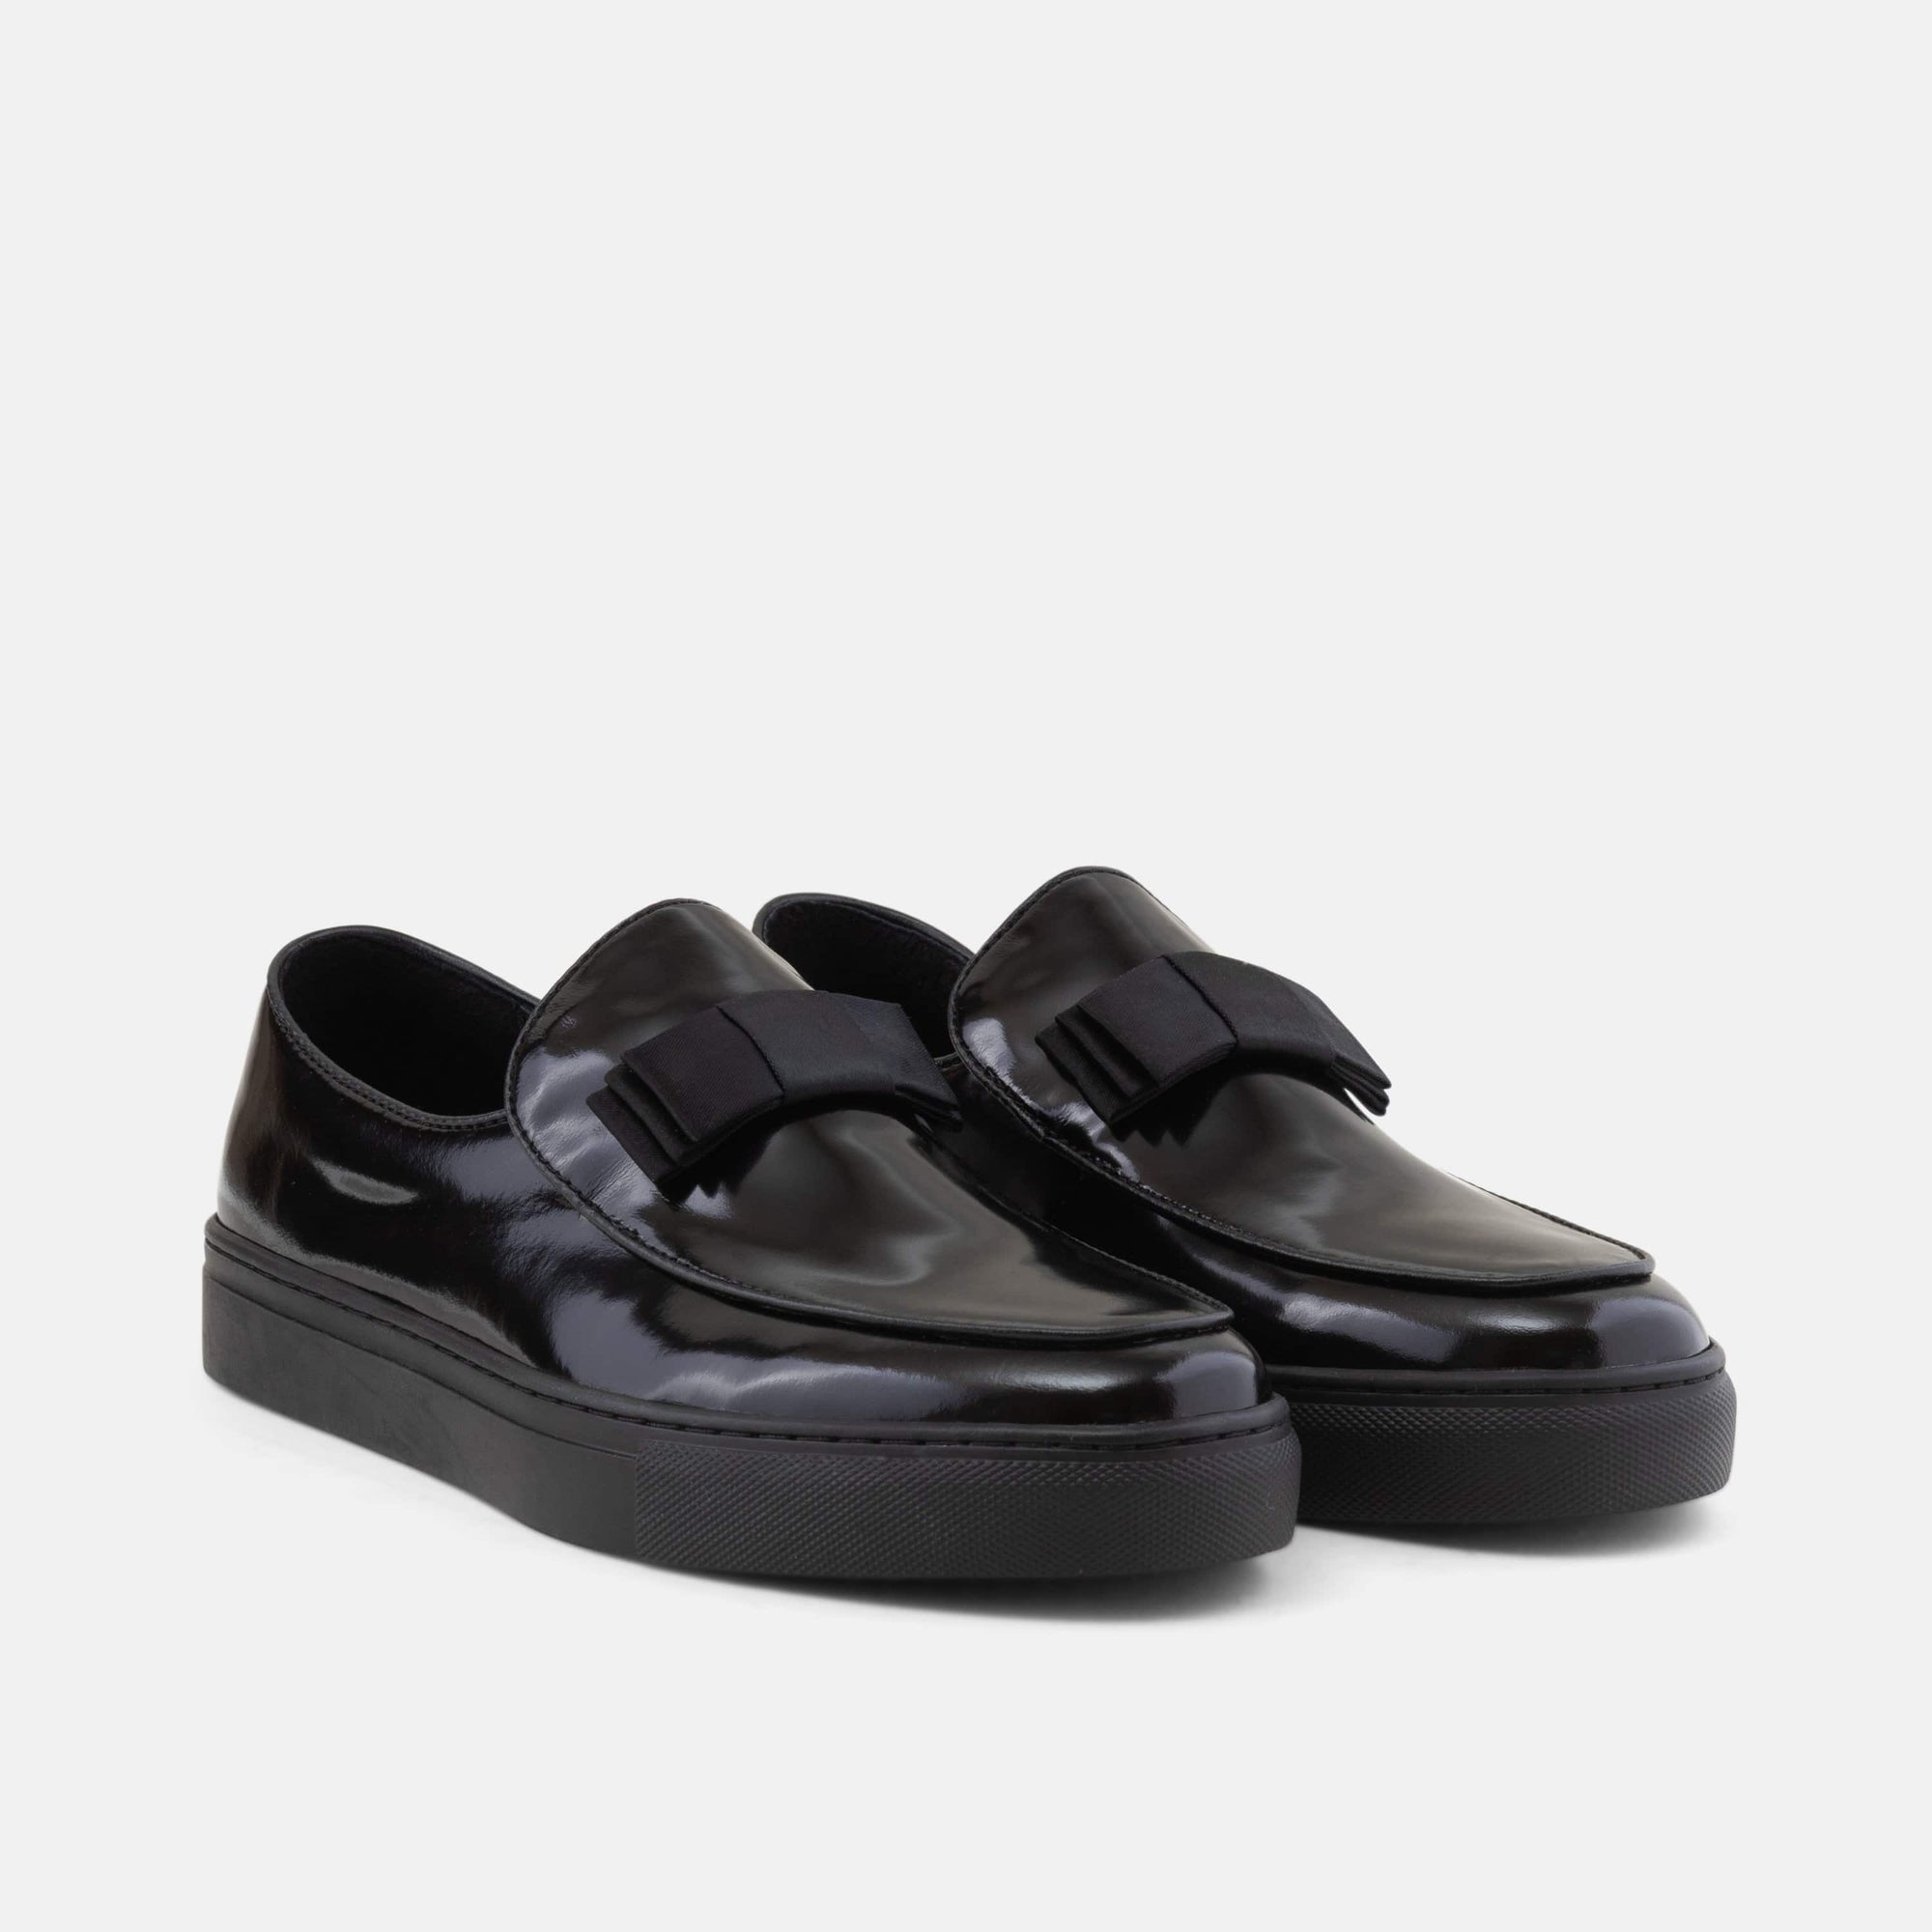 Godfrey Black Leather Belgian Loafers Sneakers